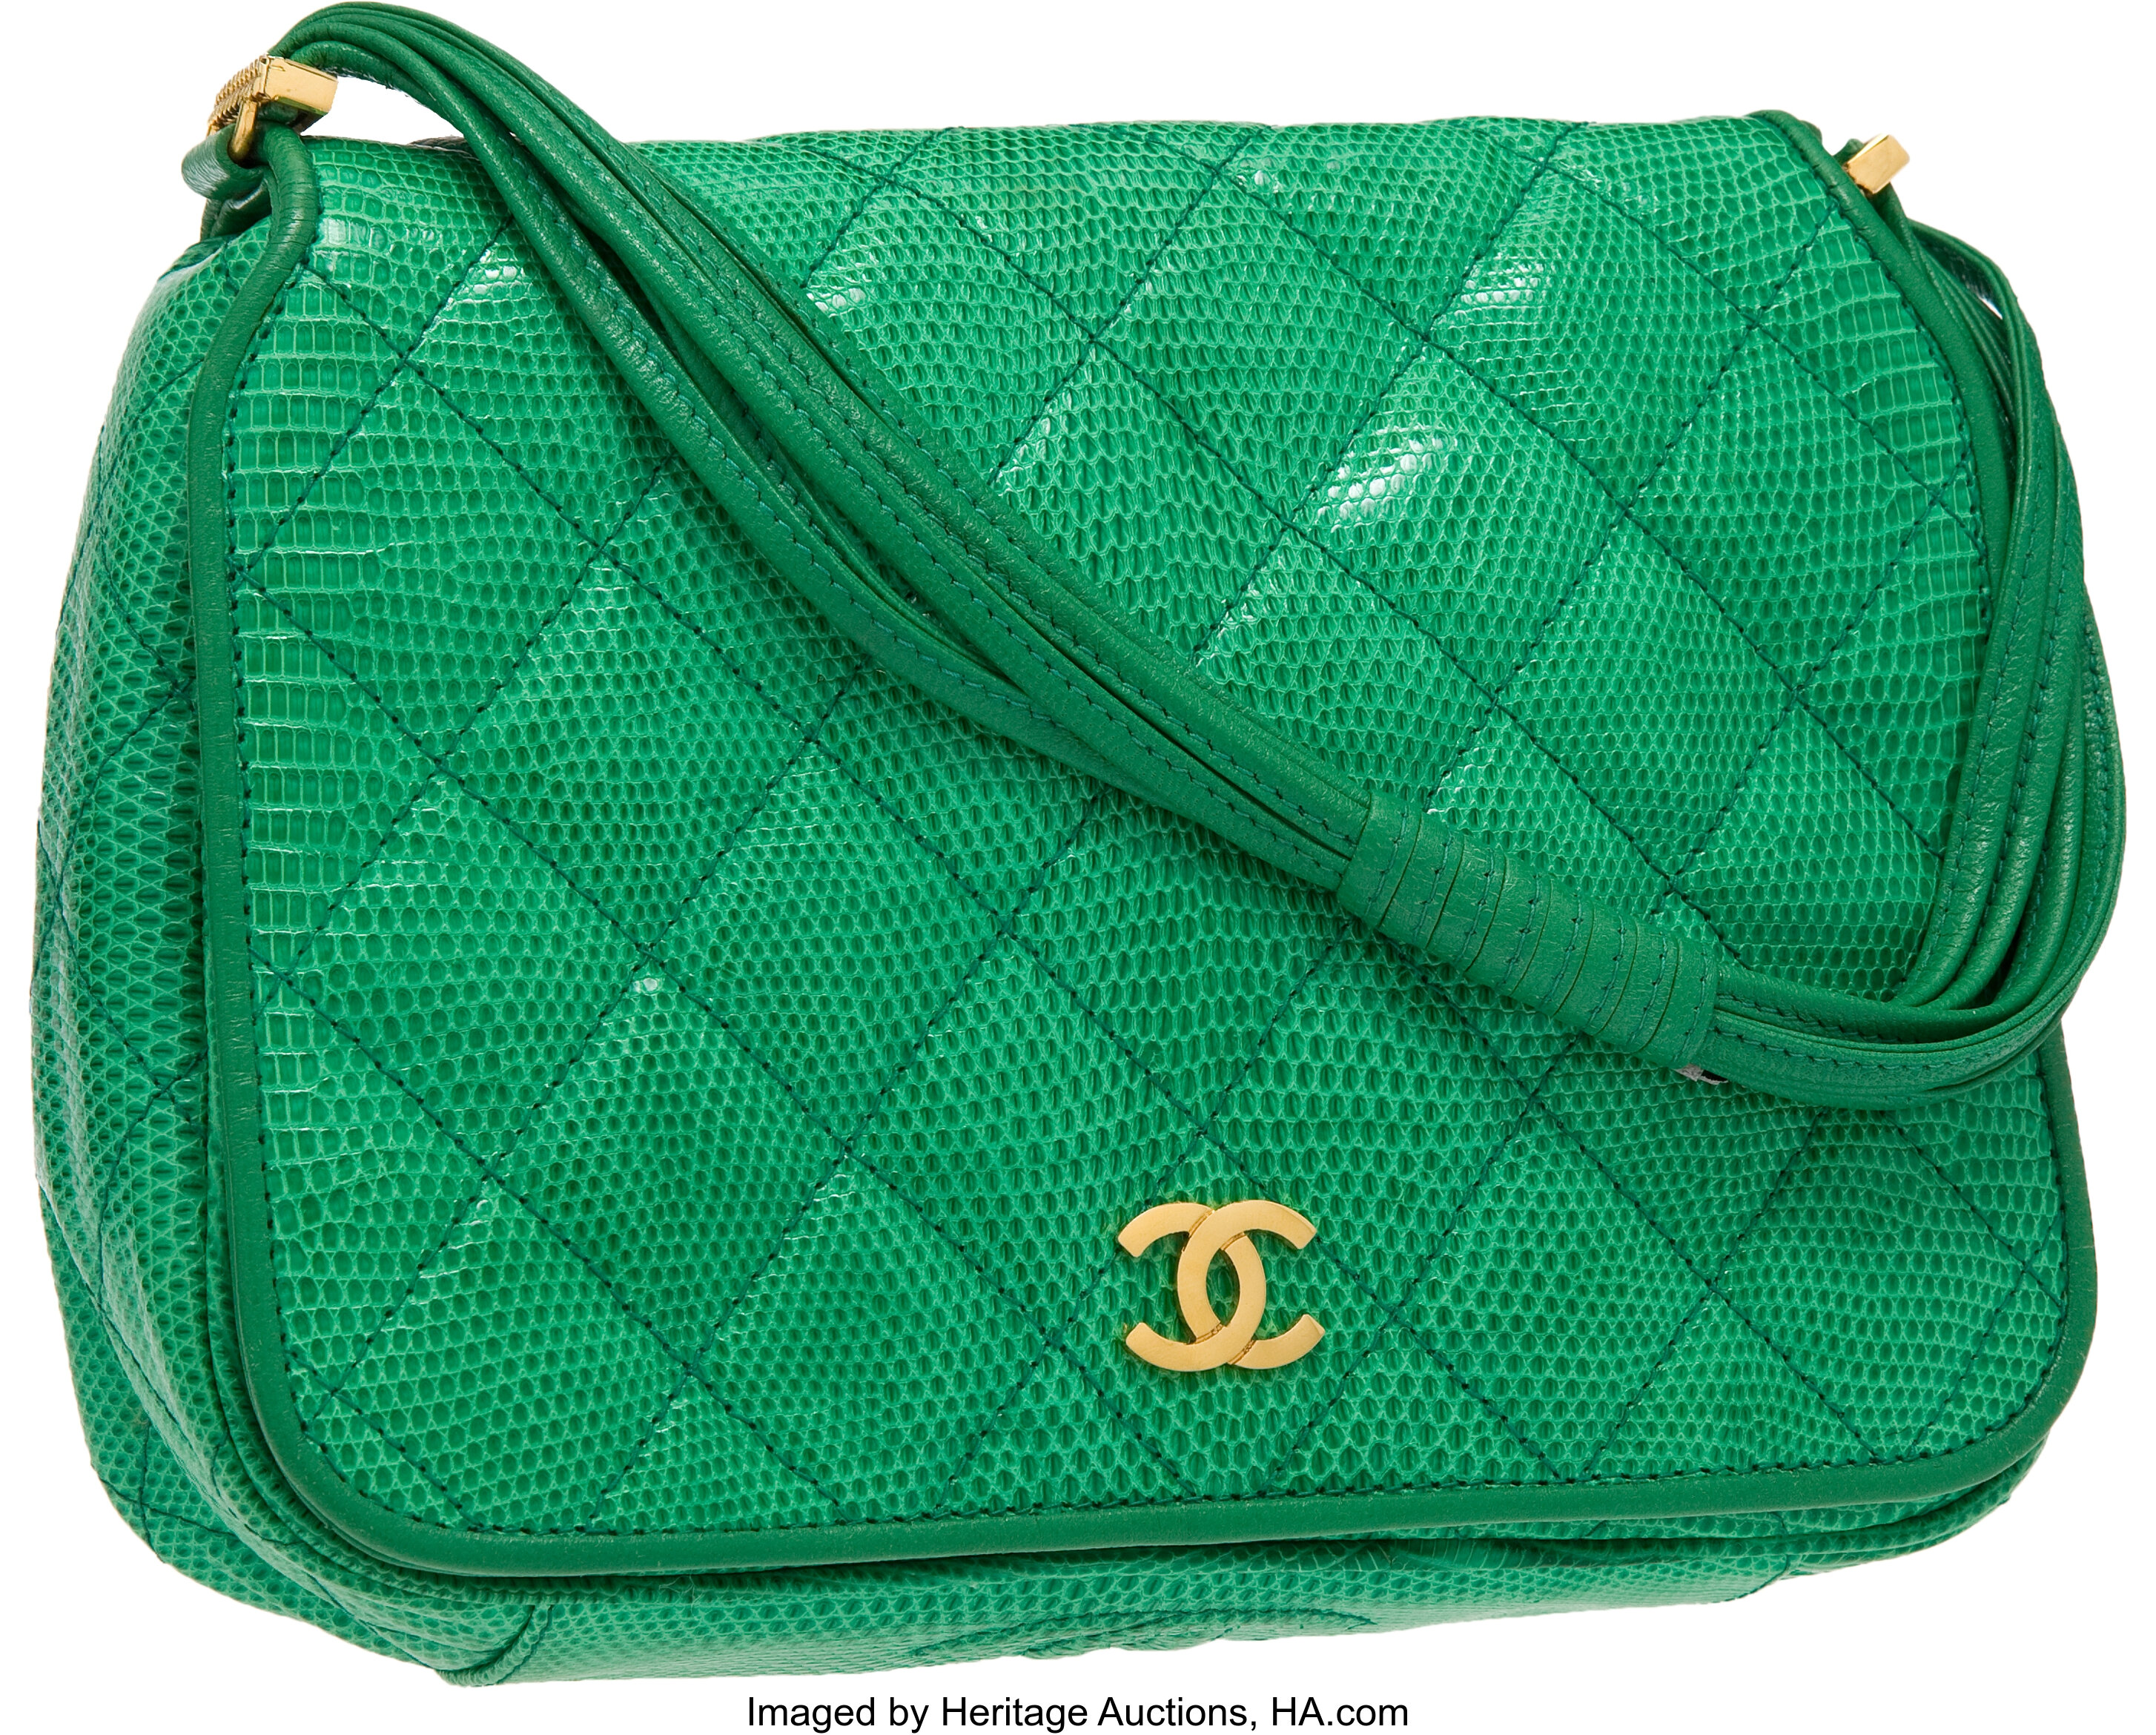 Sold at Auction: Chanel Vintage Beige Lambskin Camellia Tote Bag